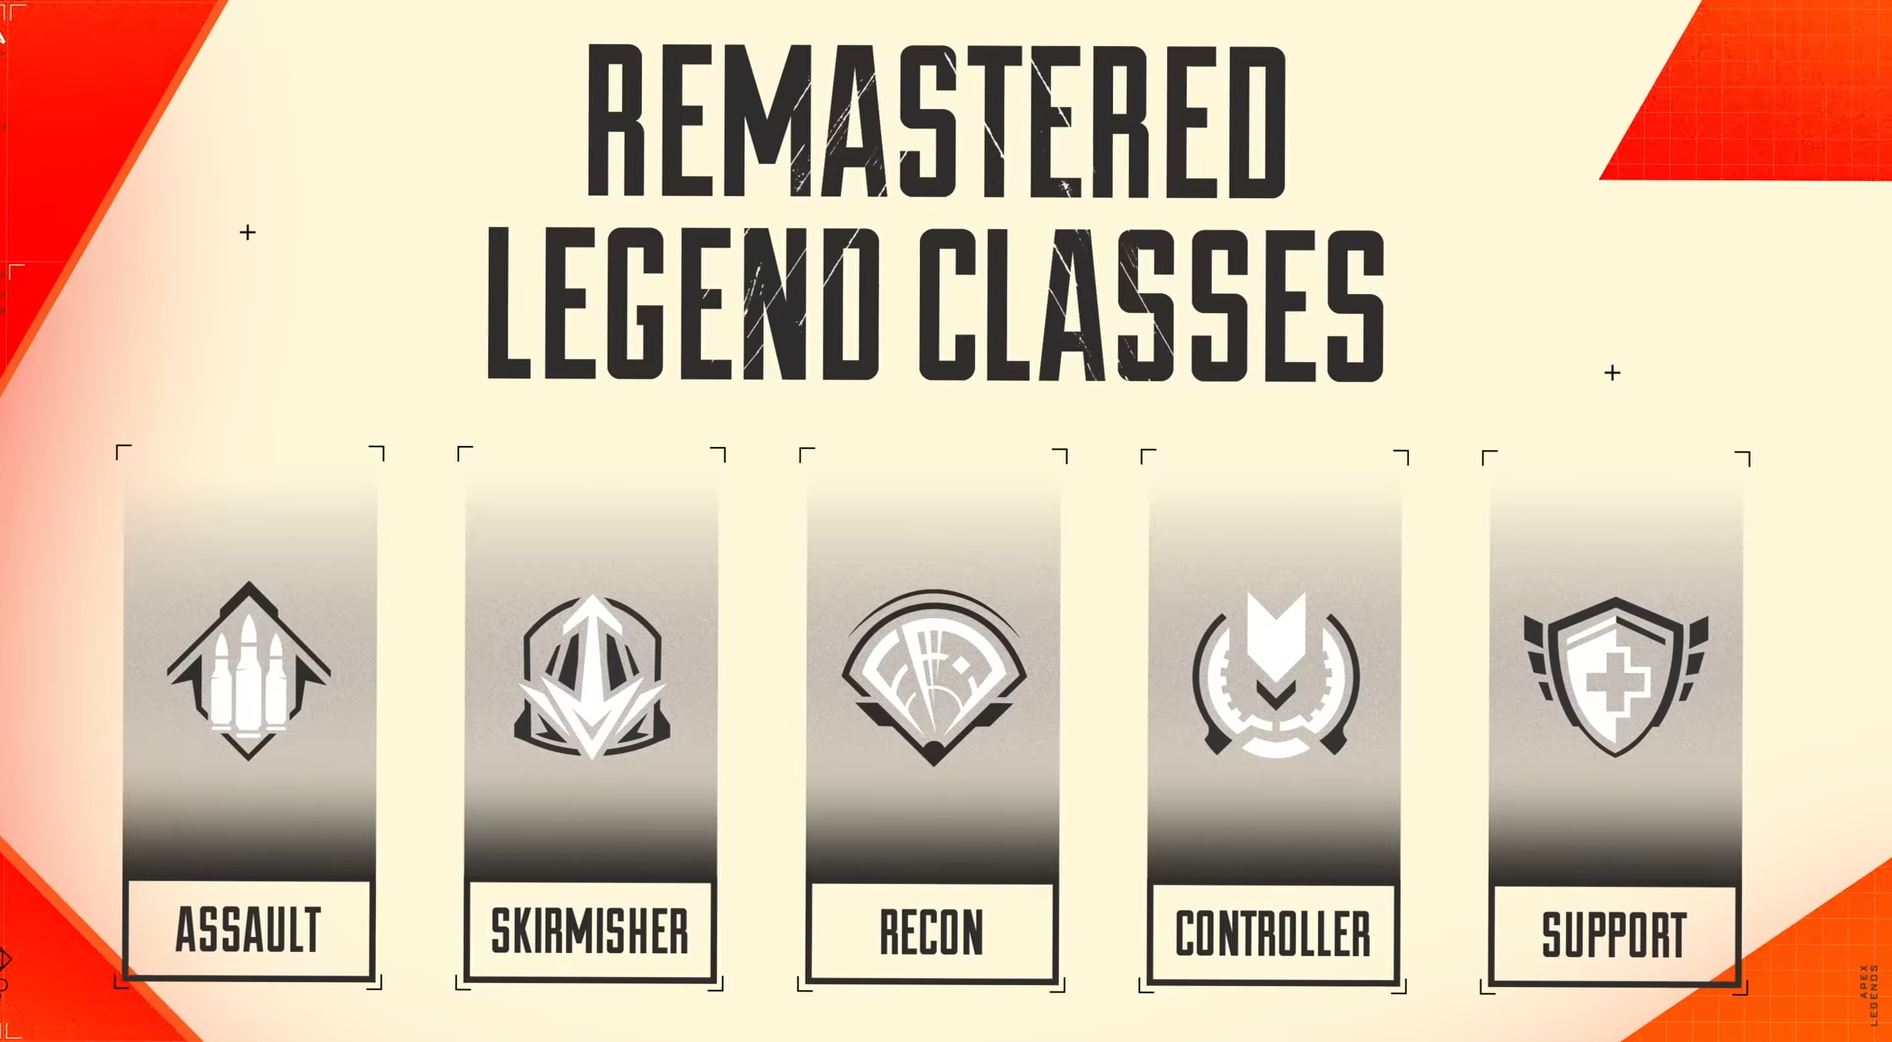 Remastered Classes in Apex Legends